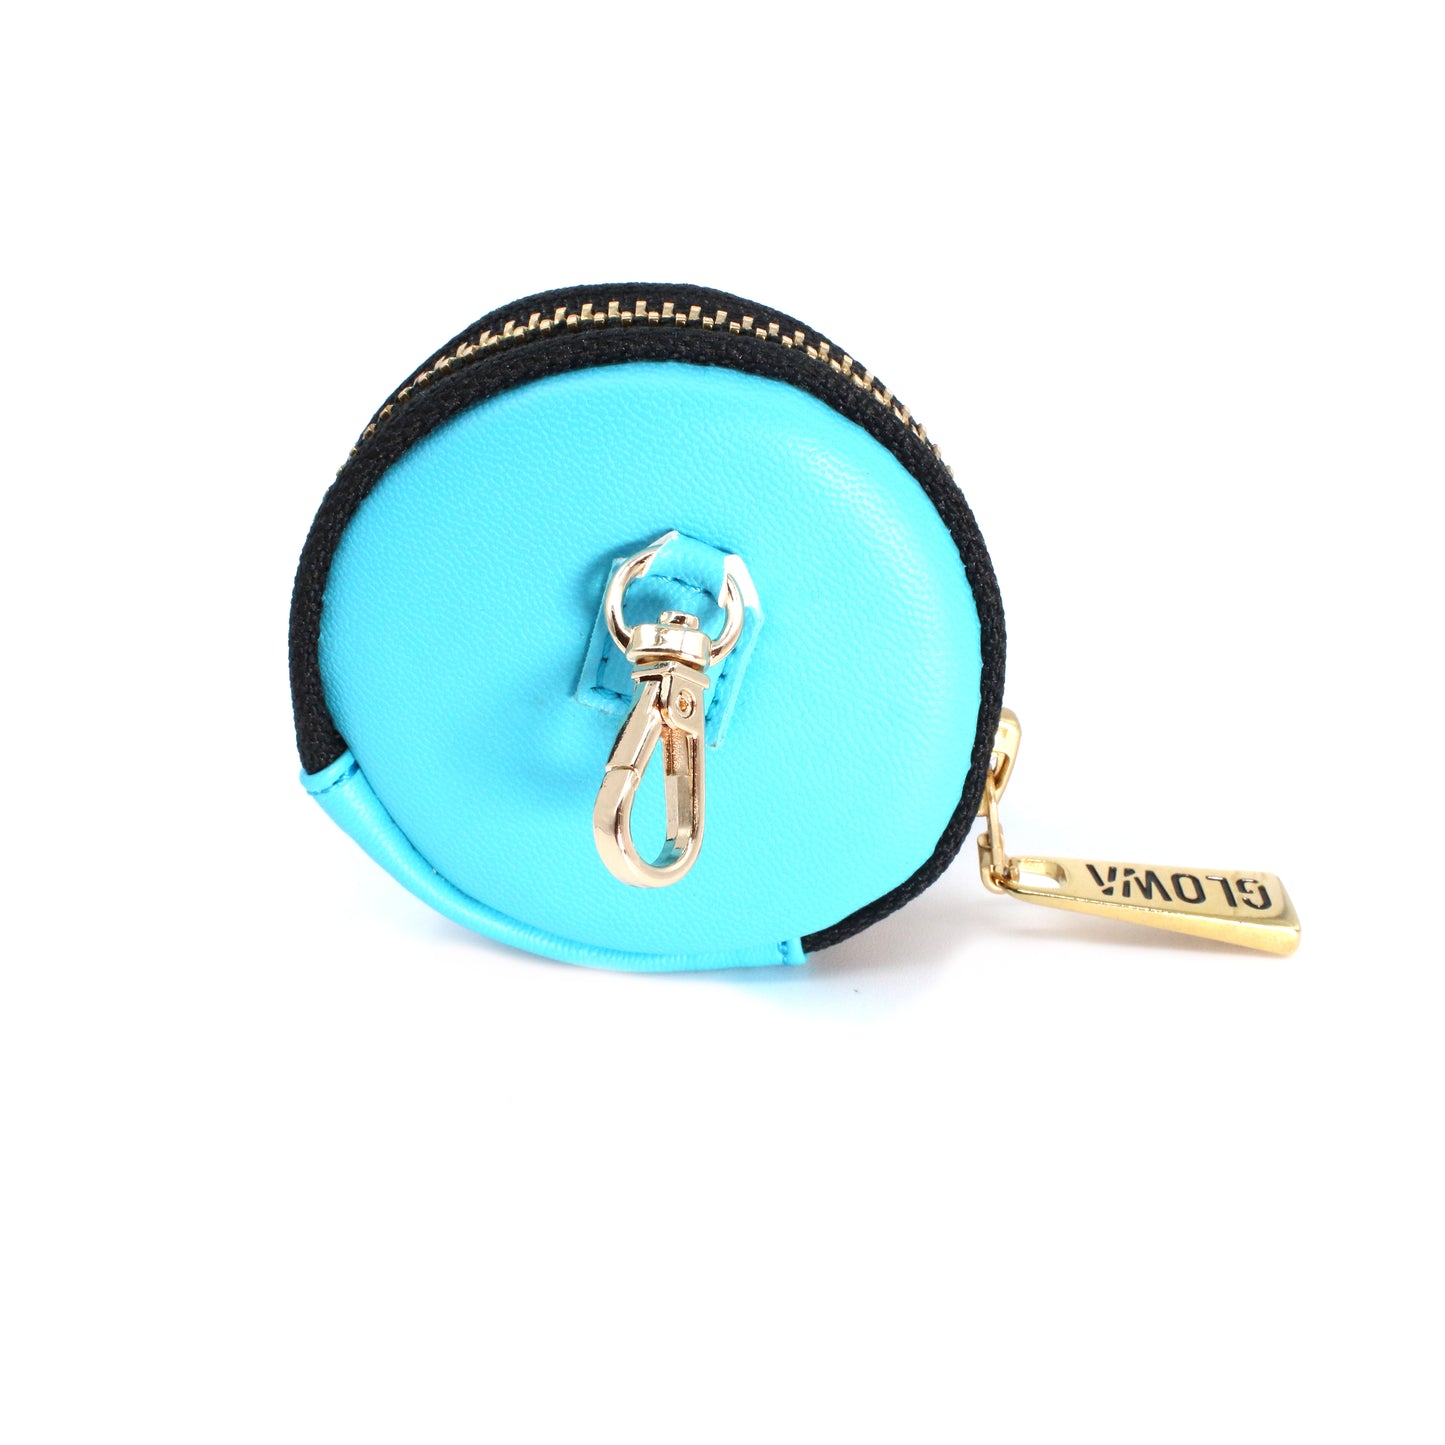 Bolsa mini azul de piel sintética - Glowa bandolera cruzada bag